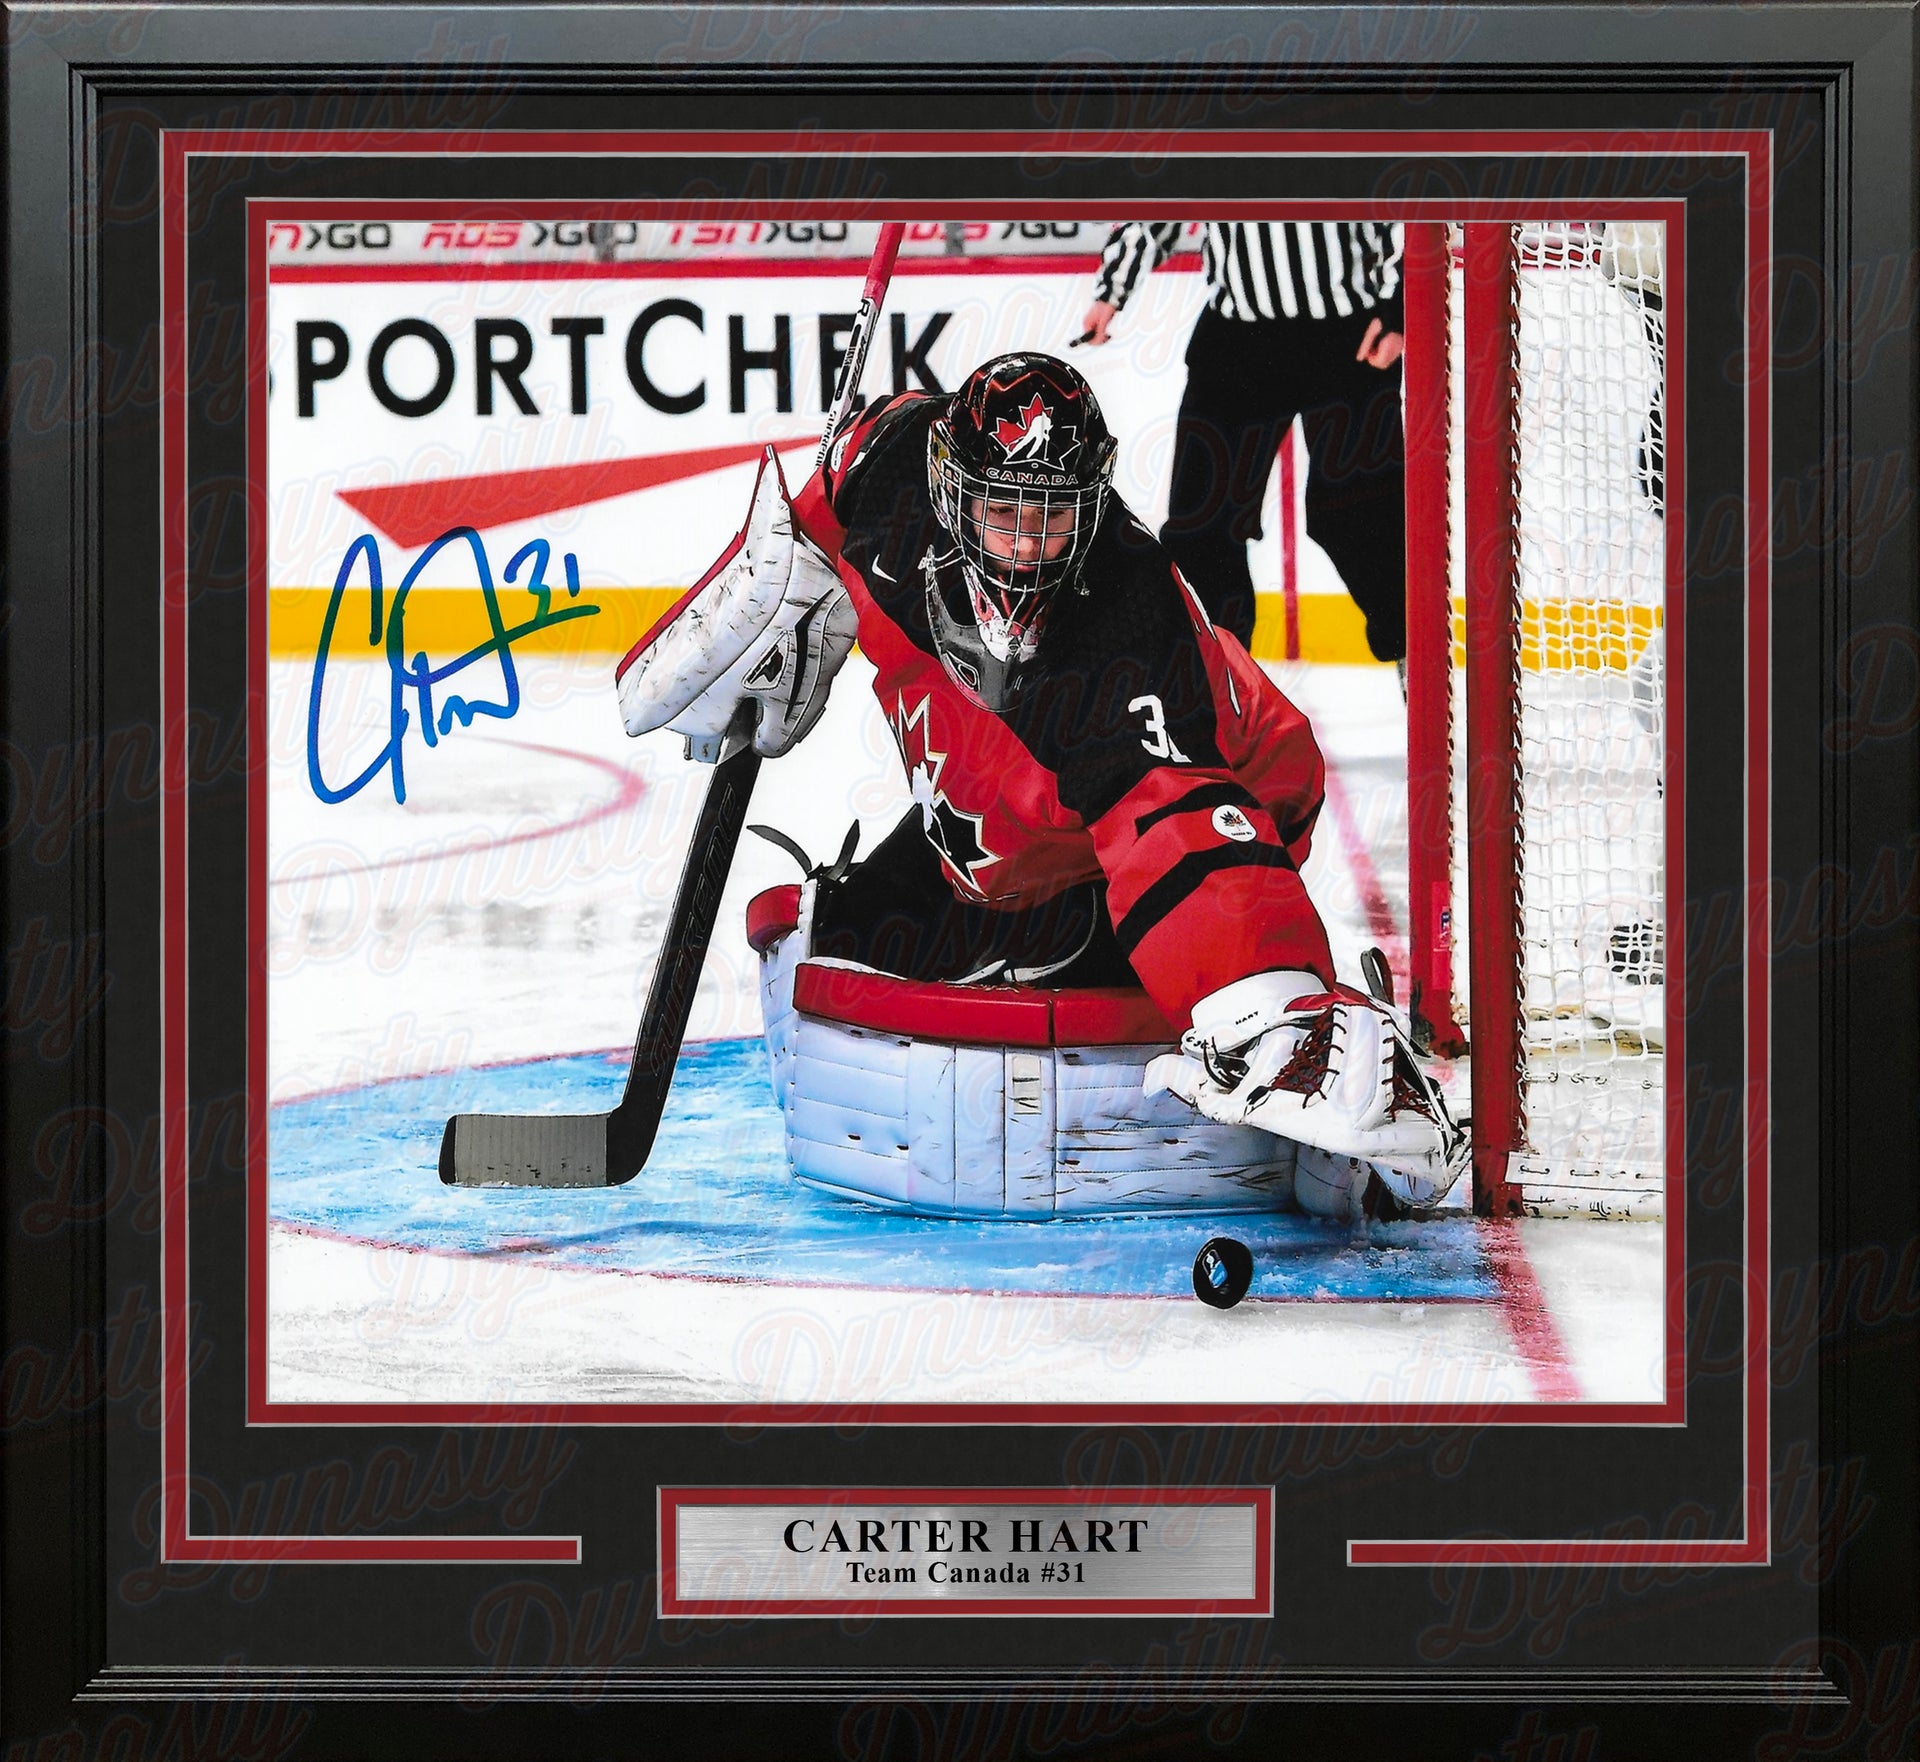 Carter Hart Philadelphia Flyers In Goal for Team Canada Autographed Framed Hockey Photo - Dynasty Sports & Framing 